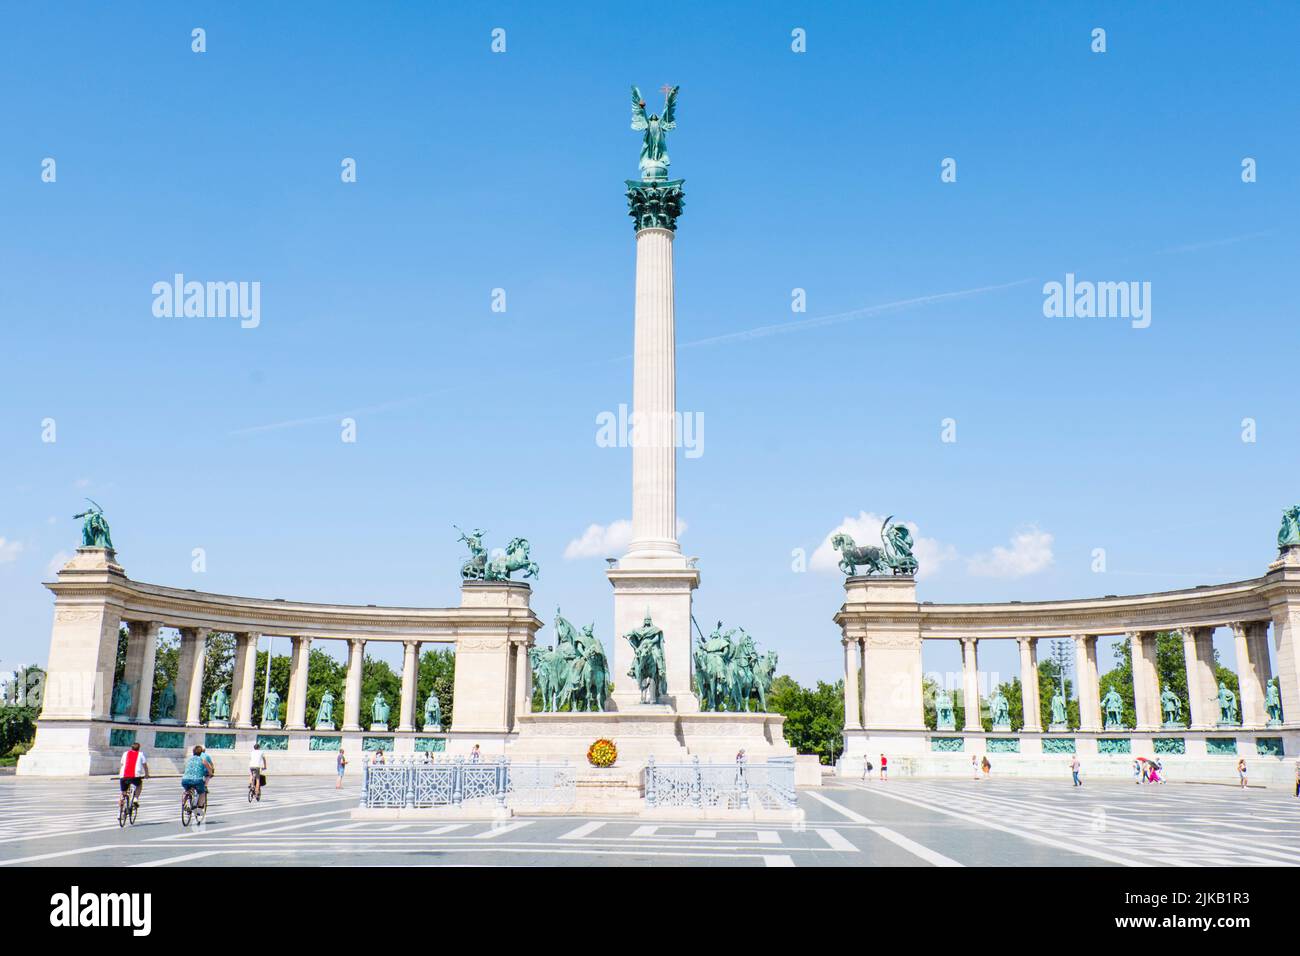 Monumento al Millenium, Hösök tere, Budapest, Ungheria Foto Stock